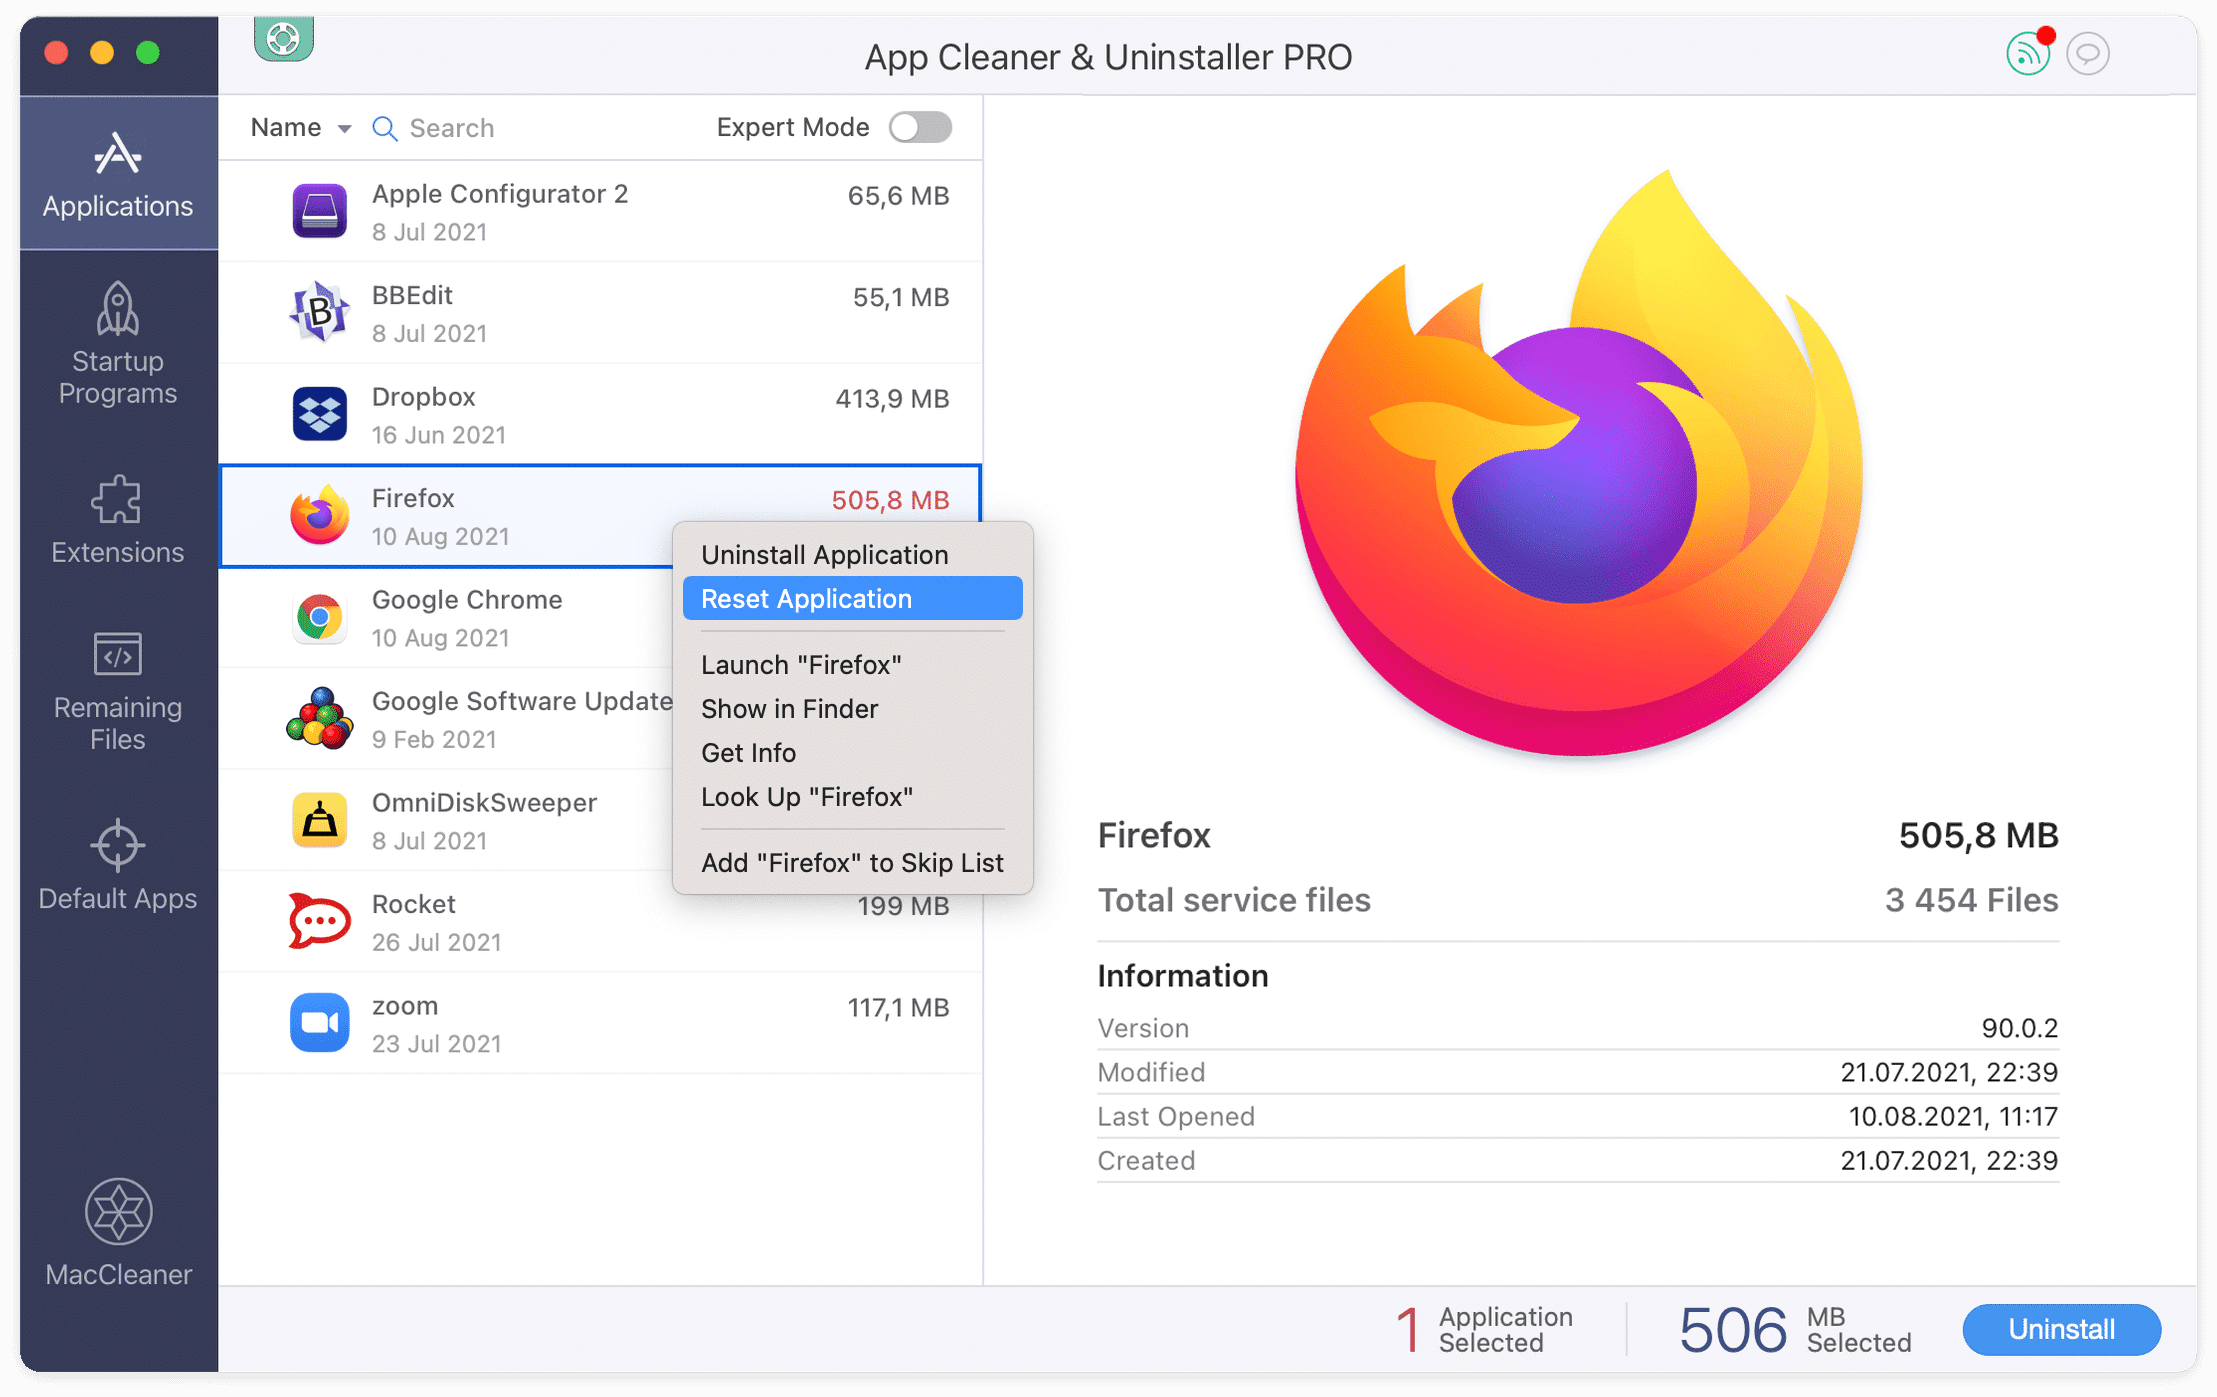 Reset Firefox with App Cleaner & Uninstaller